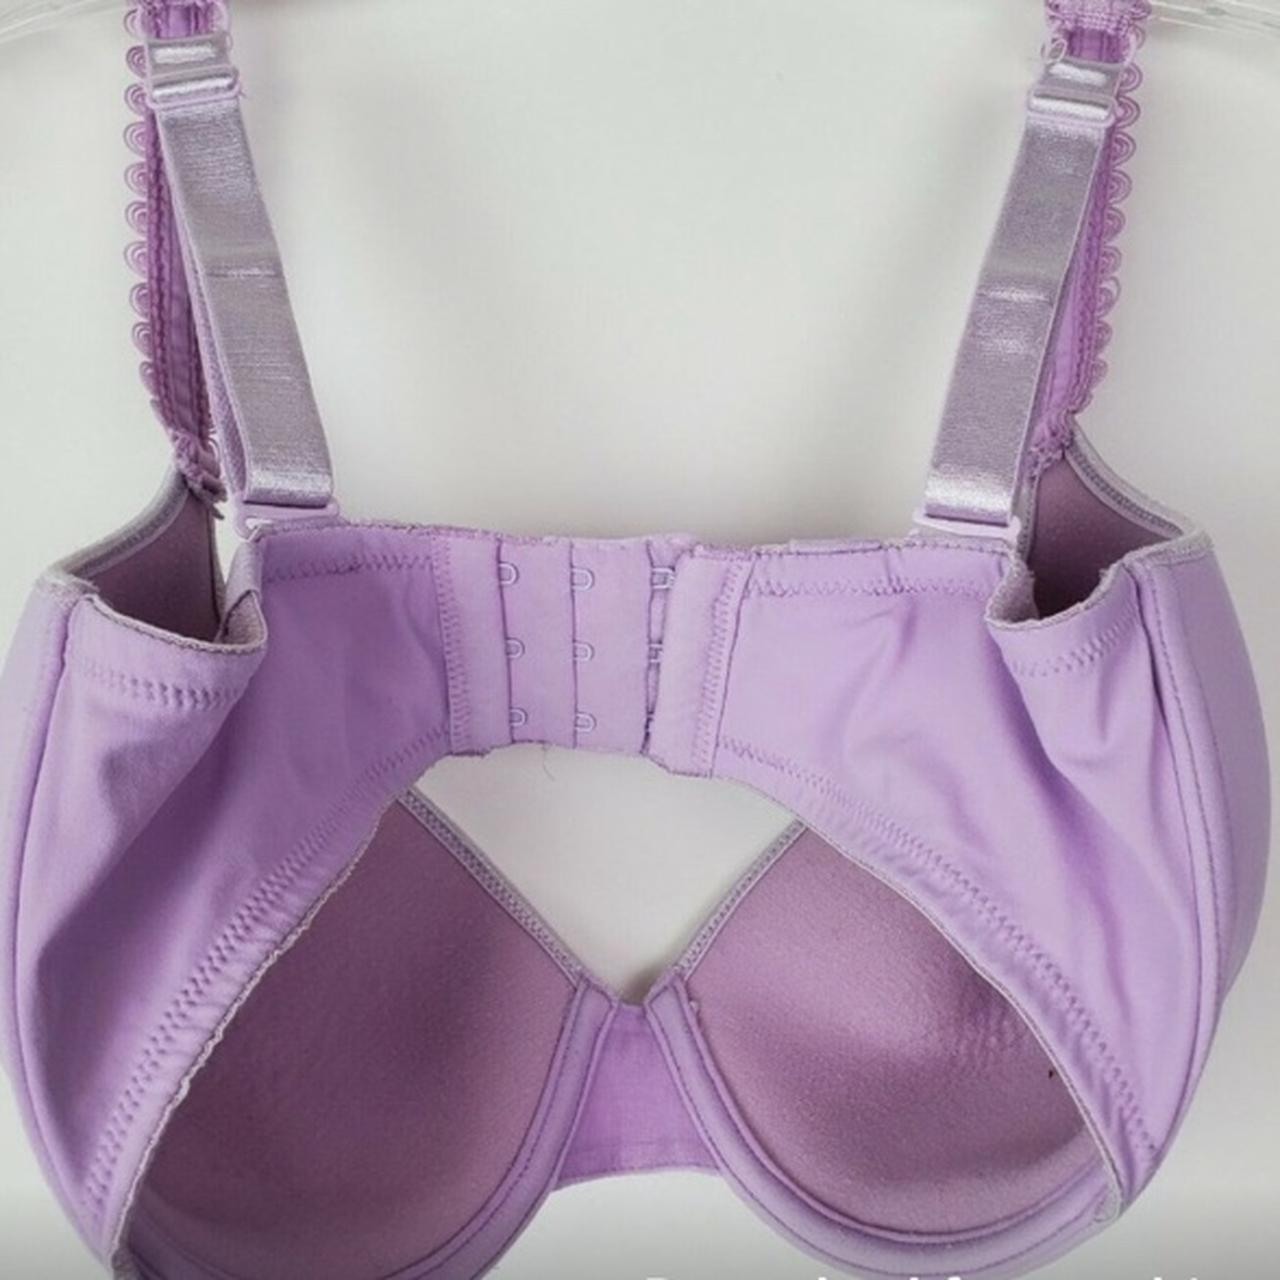 This is a 32G purple Le Mystère bra very cute bra,... - Depop